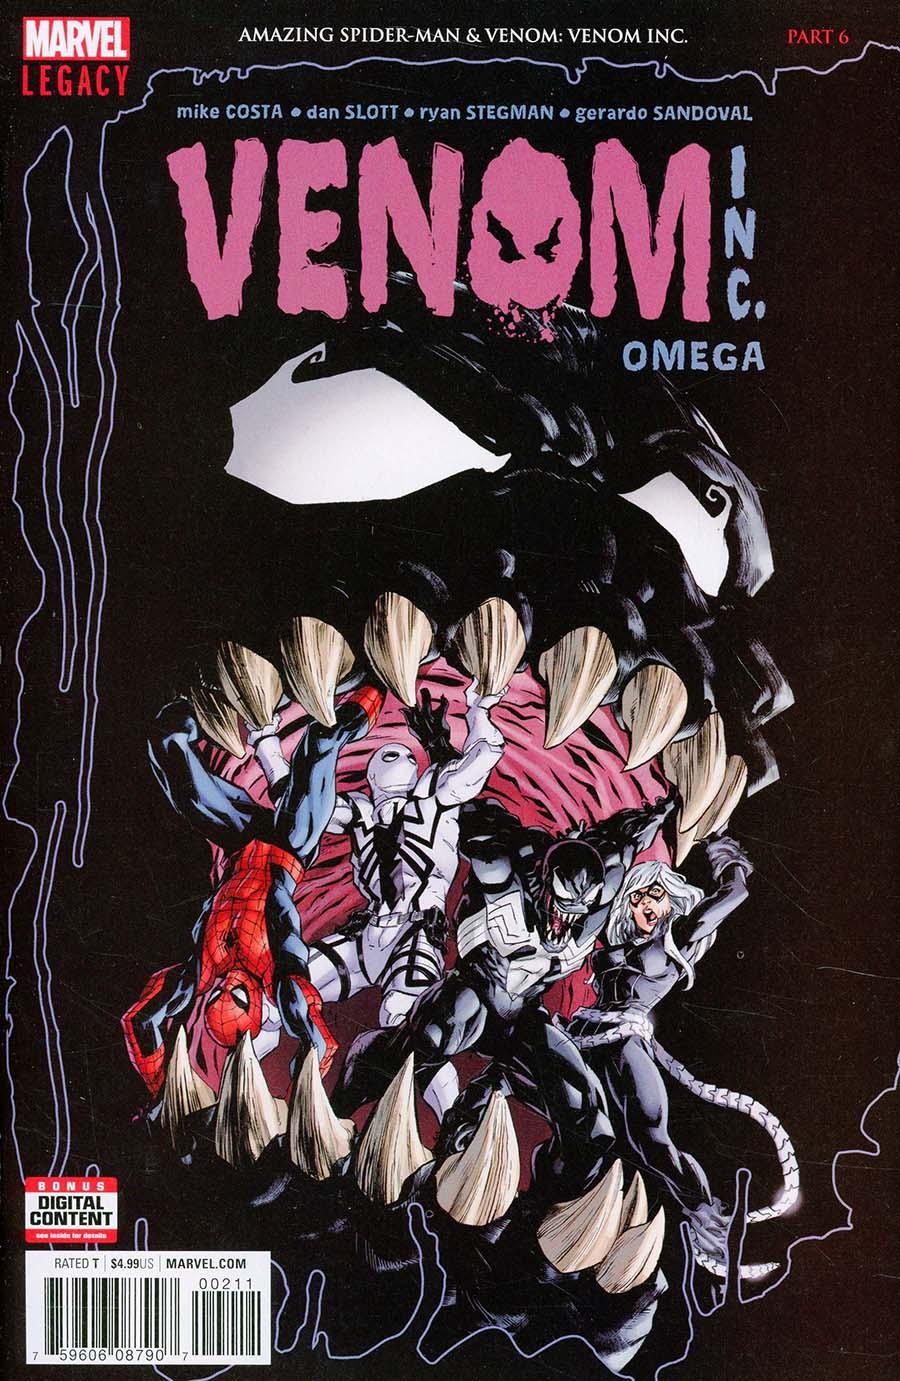 Amazing Spider-Man Venom Venom Inc Omega Vol. 1 #1